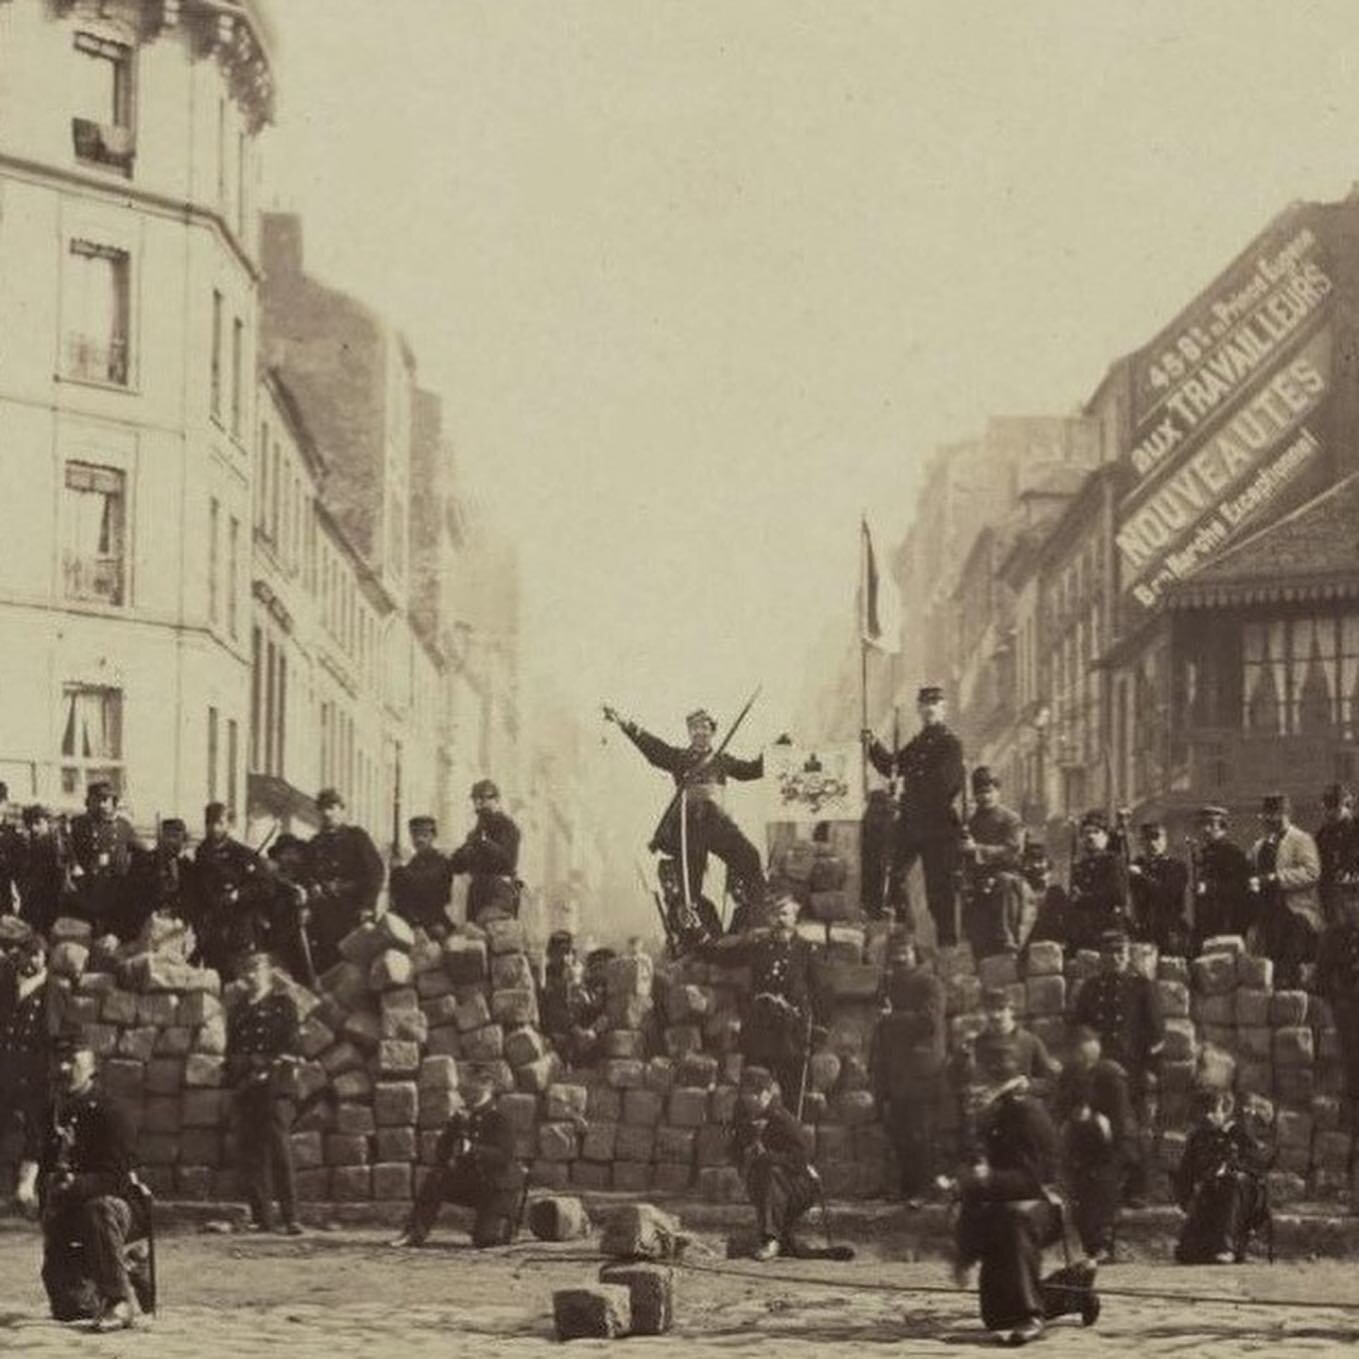 1871-Paris-Commune-Barricades-Parisology.jpg